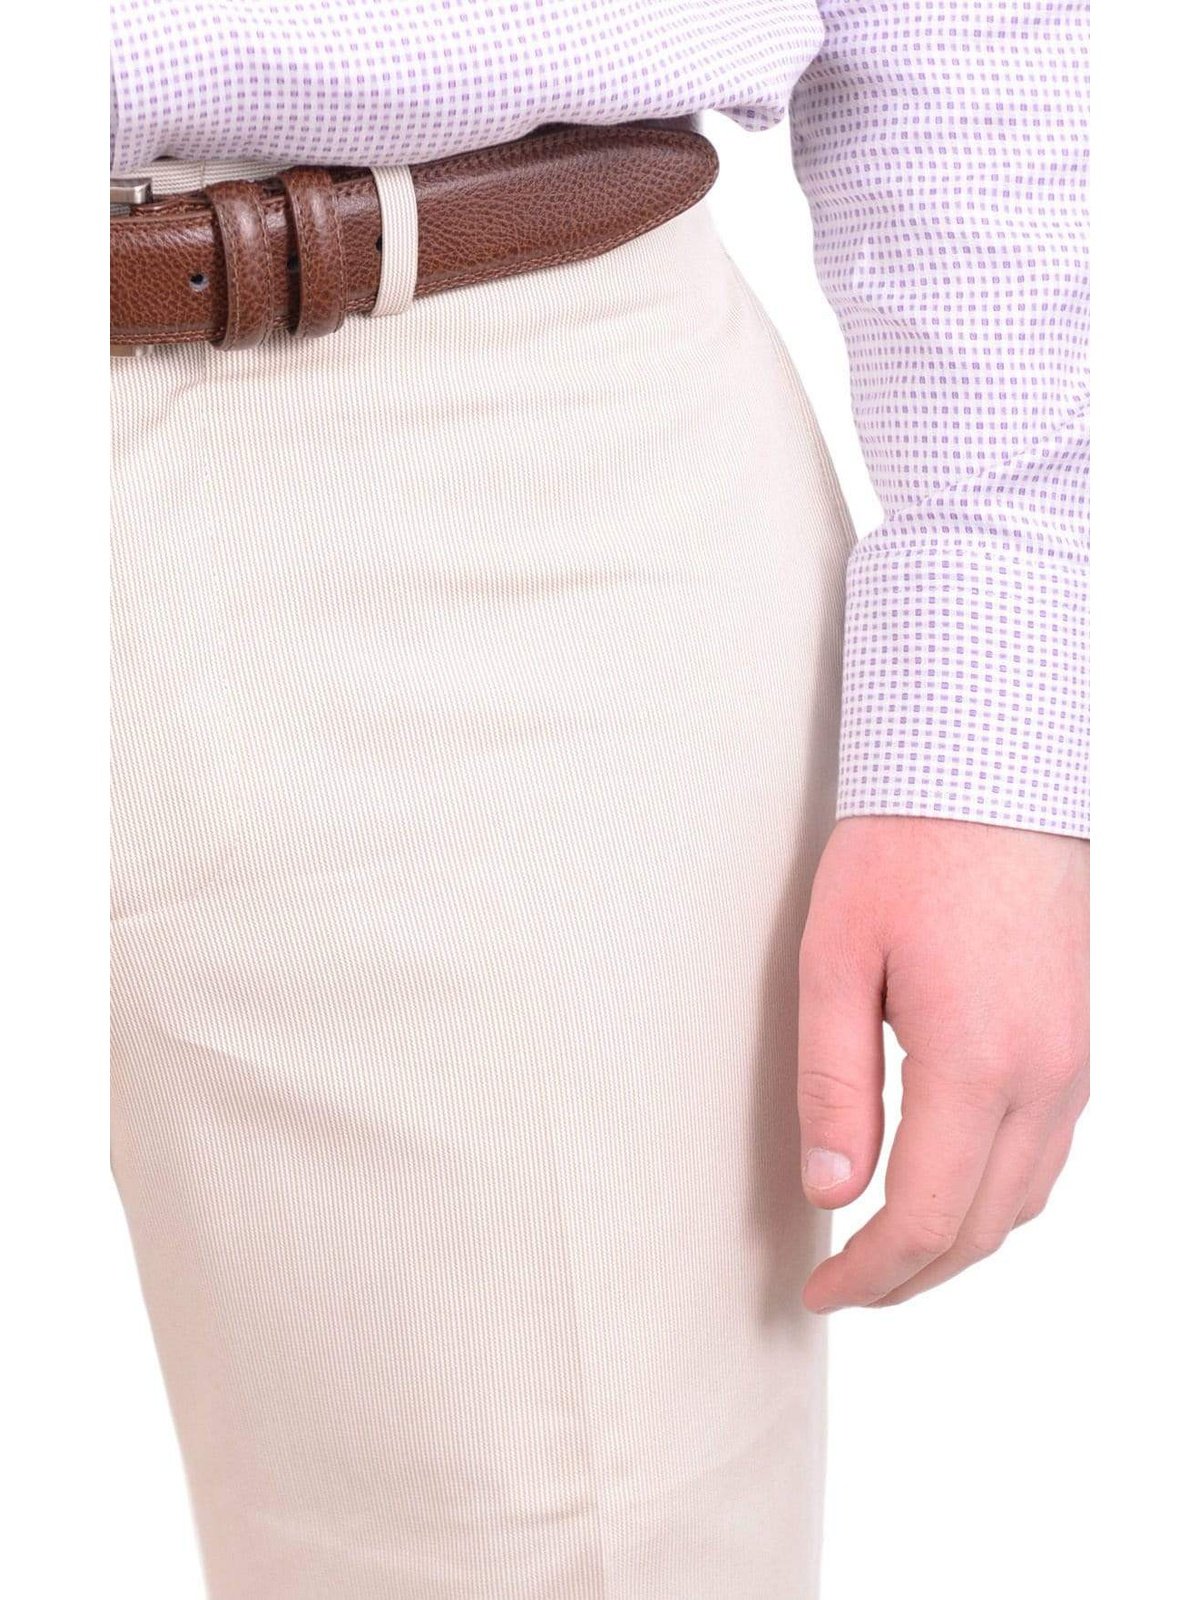 Geoffrey Beene PANTS Geoffrey Beene Classic Fit Tan Corded Flat Front Cotton Blend Dress Pants